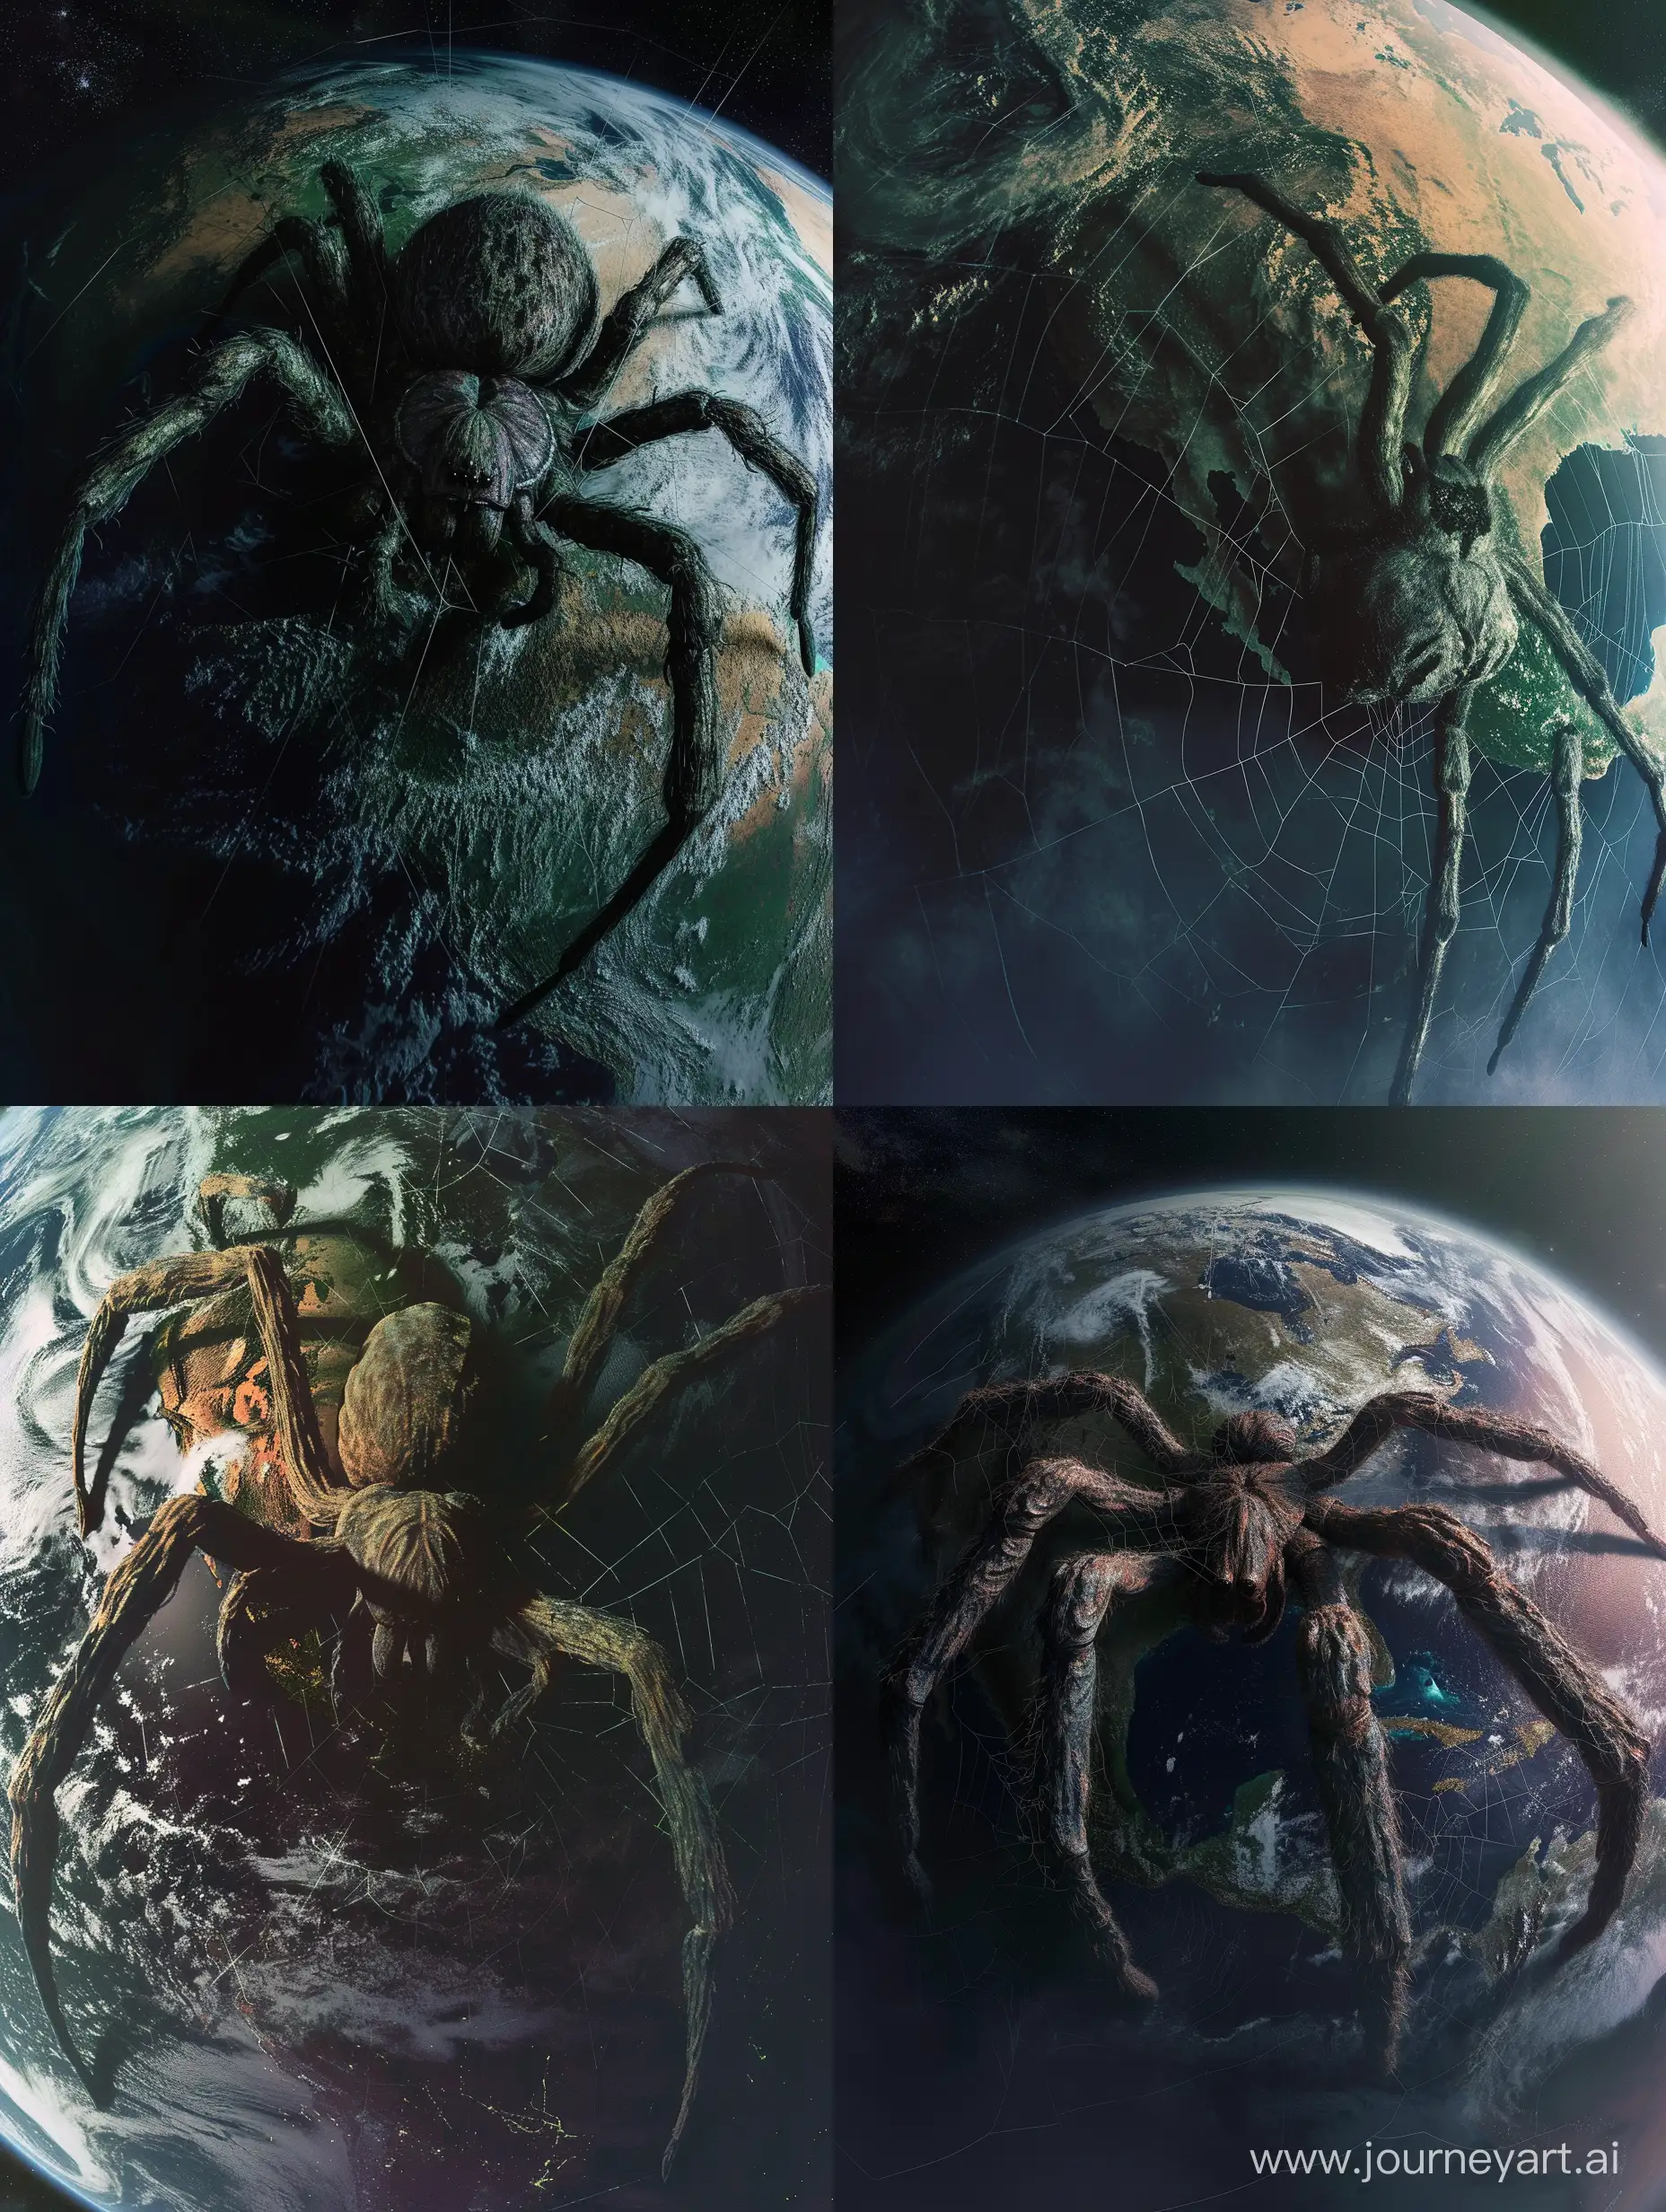 Eerie-Satellite-Image-Massive-Spider-Envelops-Earth-in-Sinister-Web